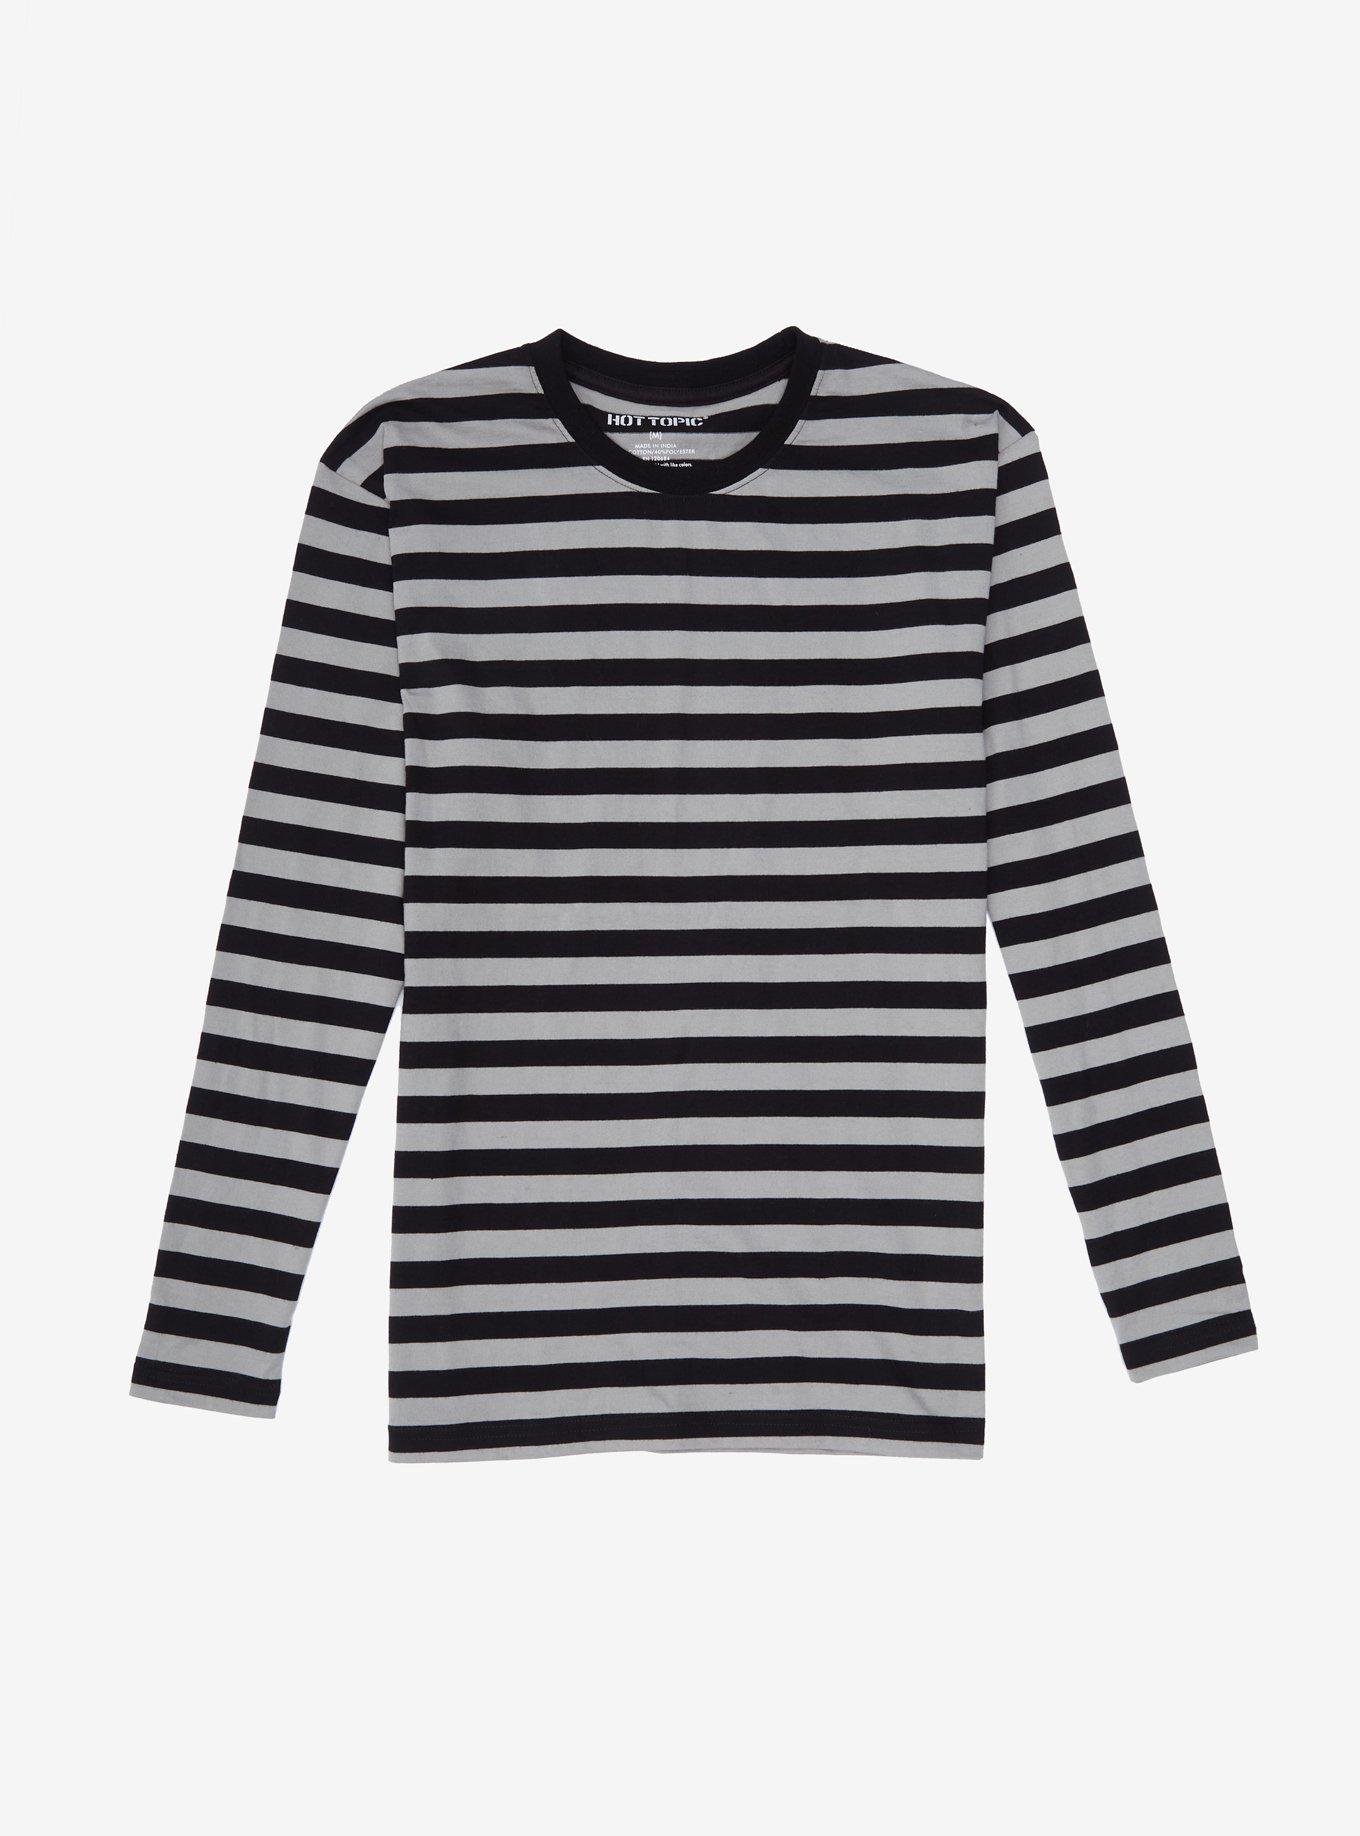 Grey & Black Stripe Long-Sleeve T-Shirt